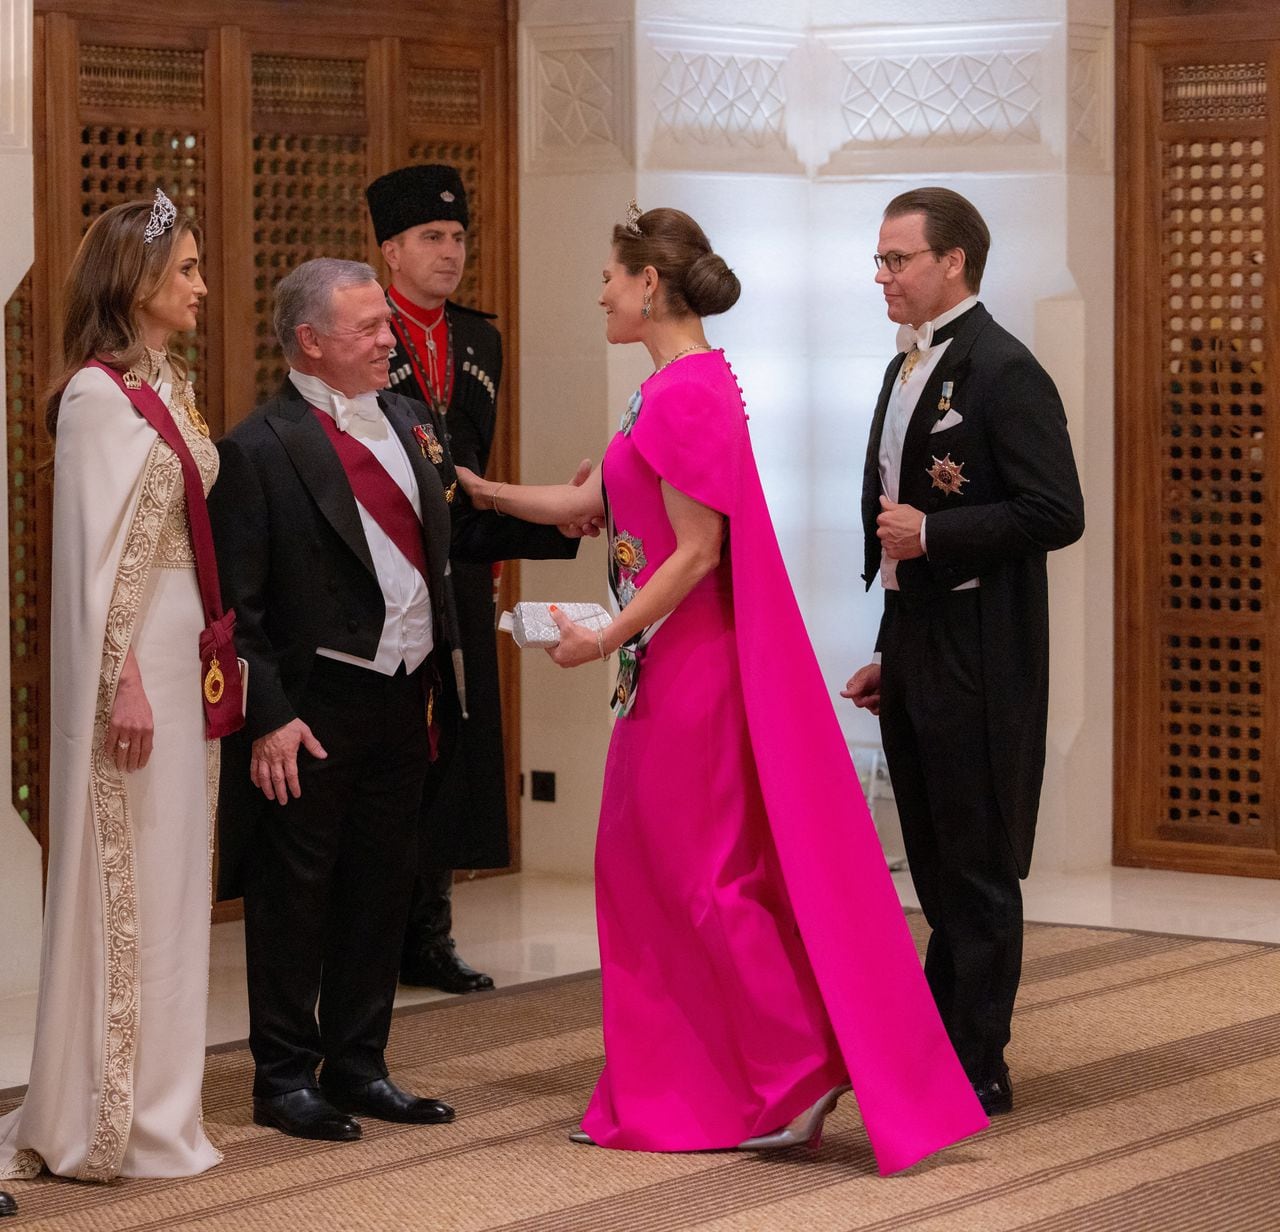 Jordan's Crown Prince Hussein and Rajwa Al Saif's royal wedding